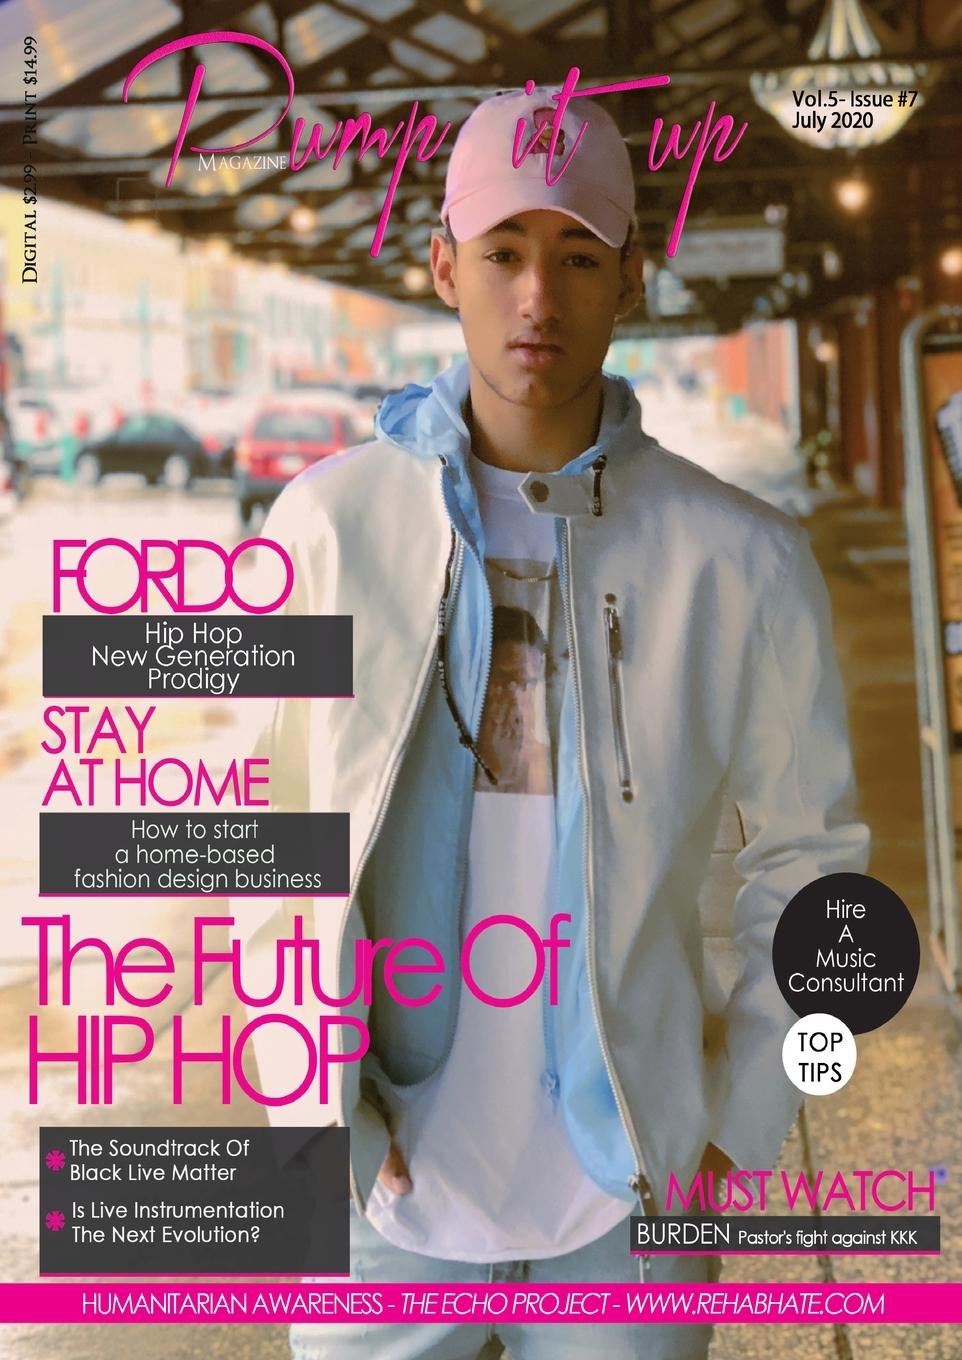 Книга Pump it up magazine presents FORDO - Gen-Z Hip Hop Prodigy! 